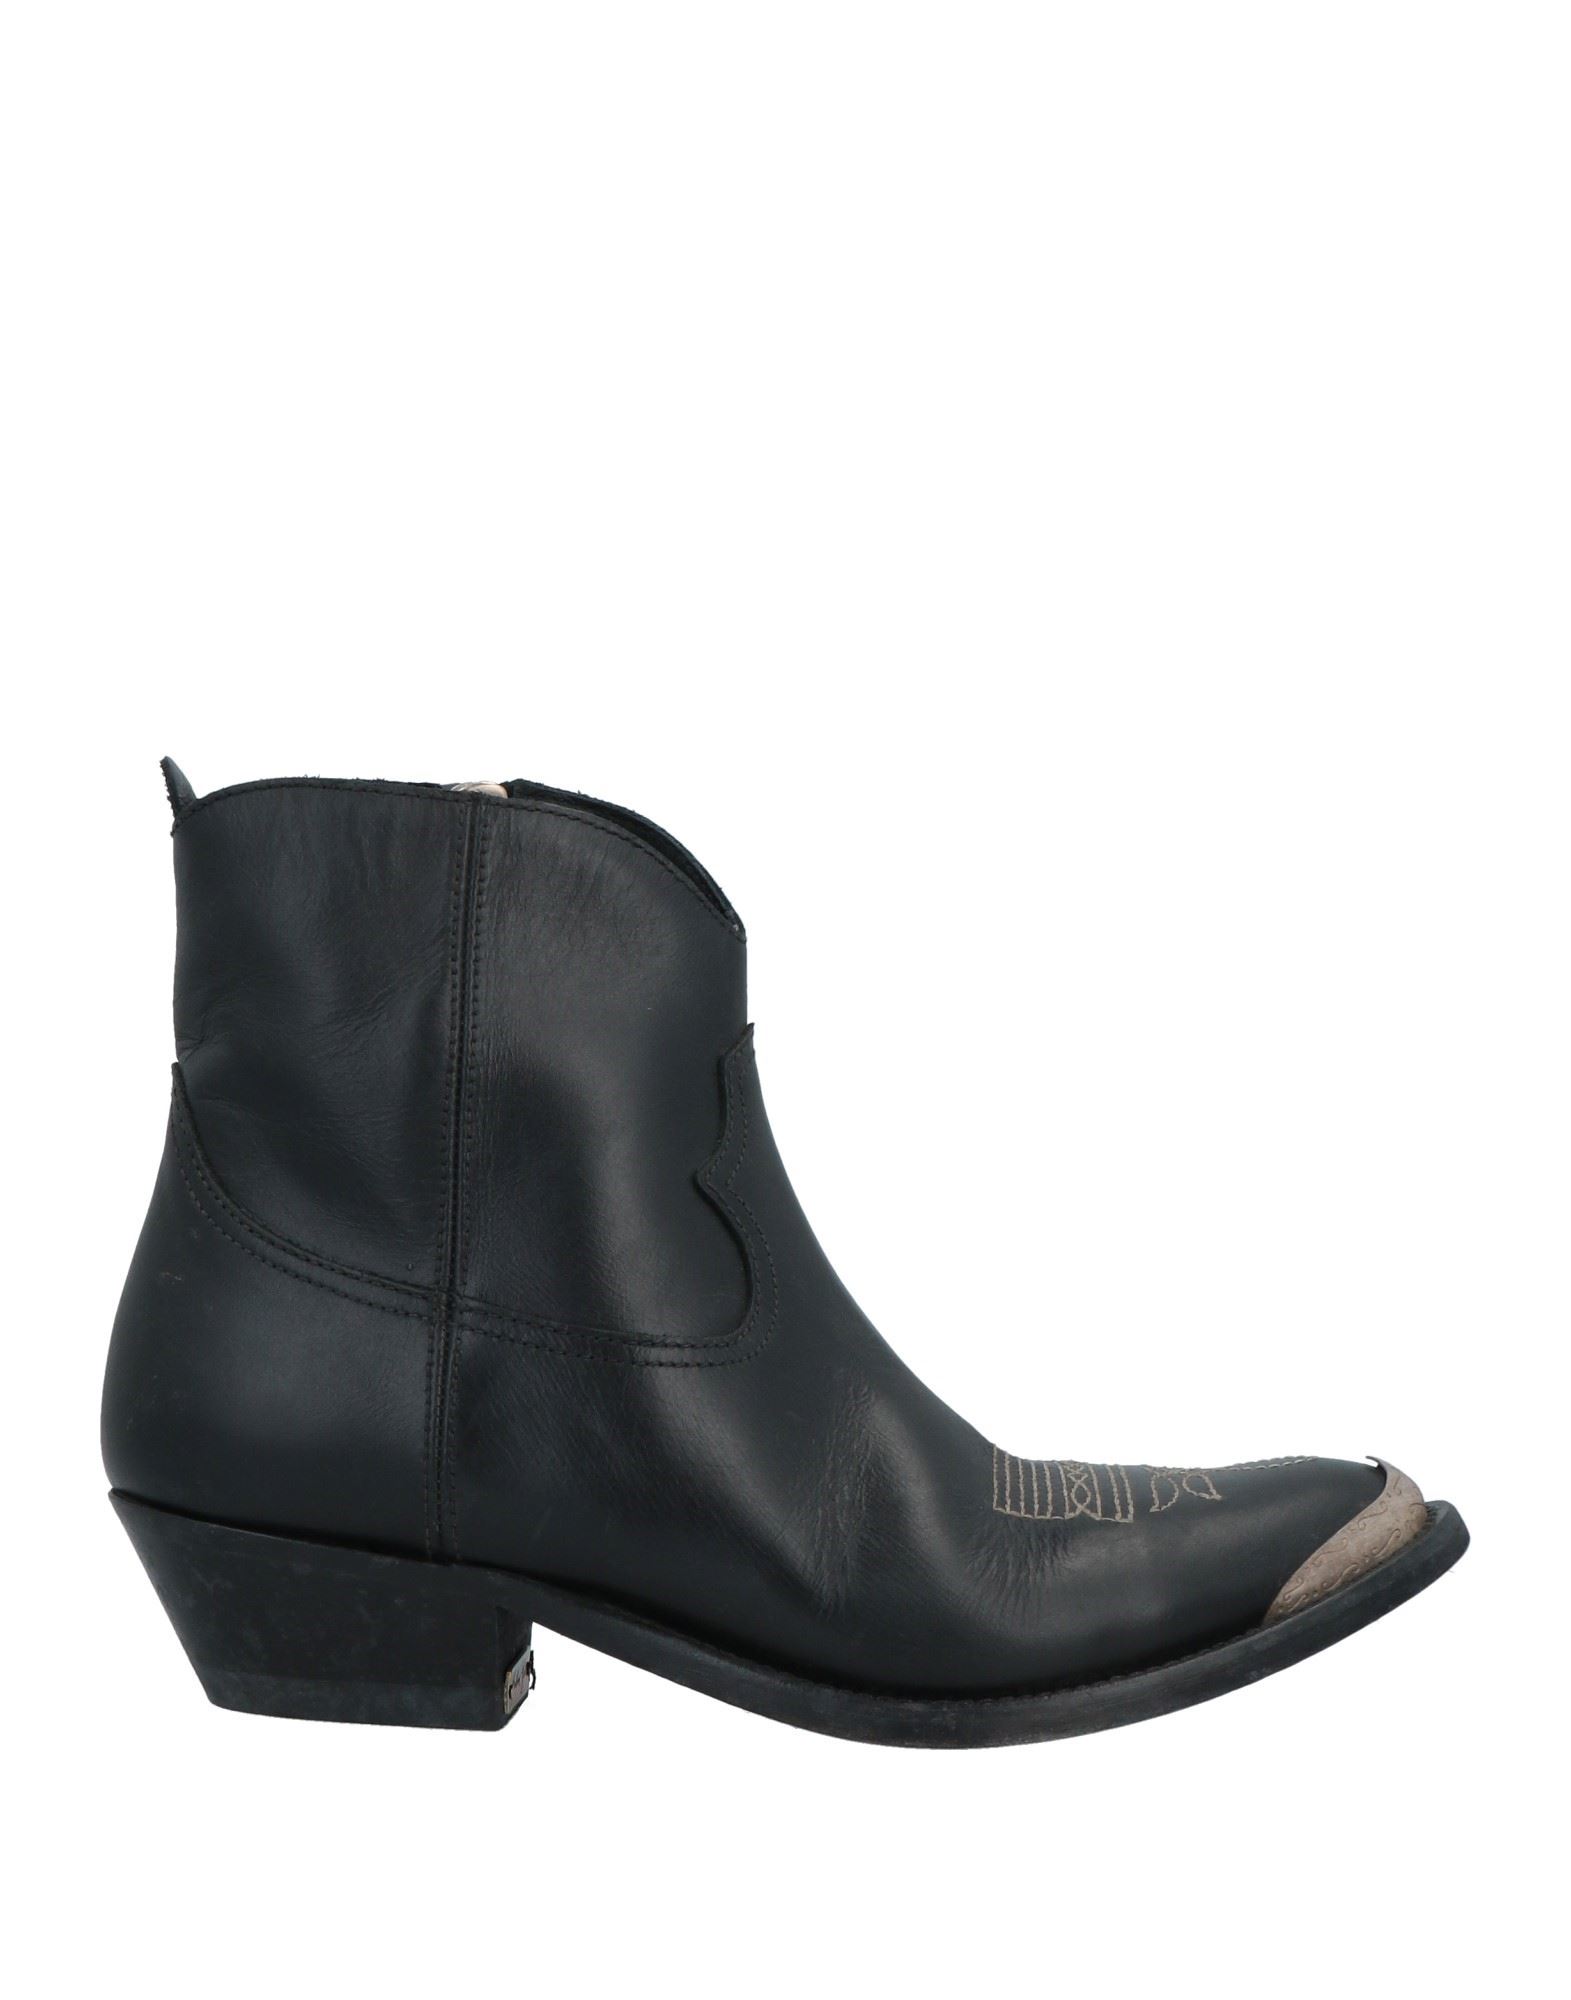 Shop Golden Goose Woman Ankle Boots Black Size 7 Leather